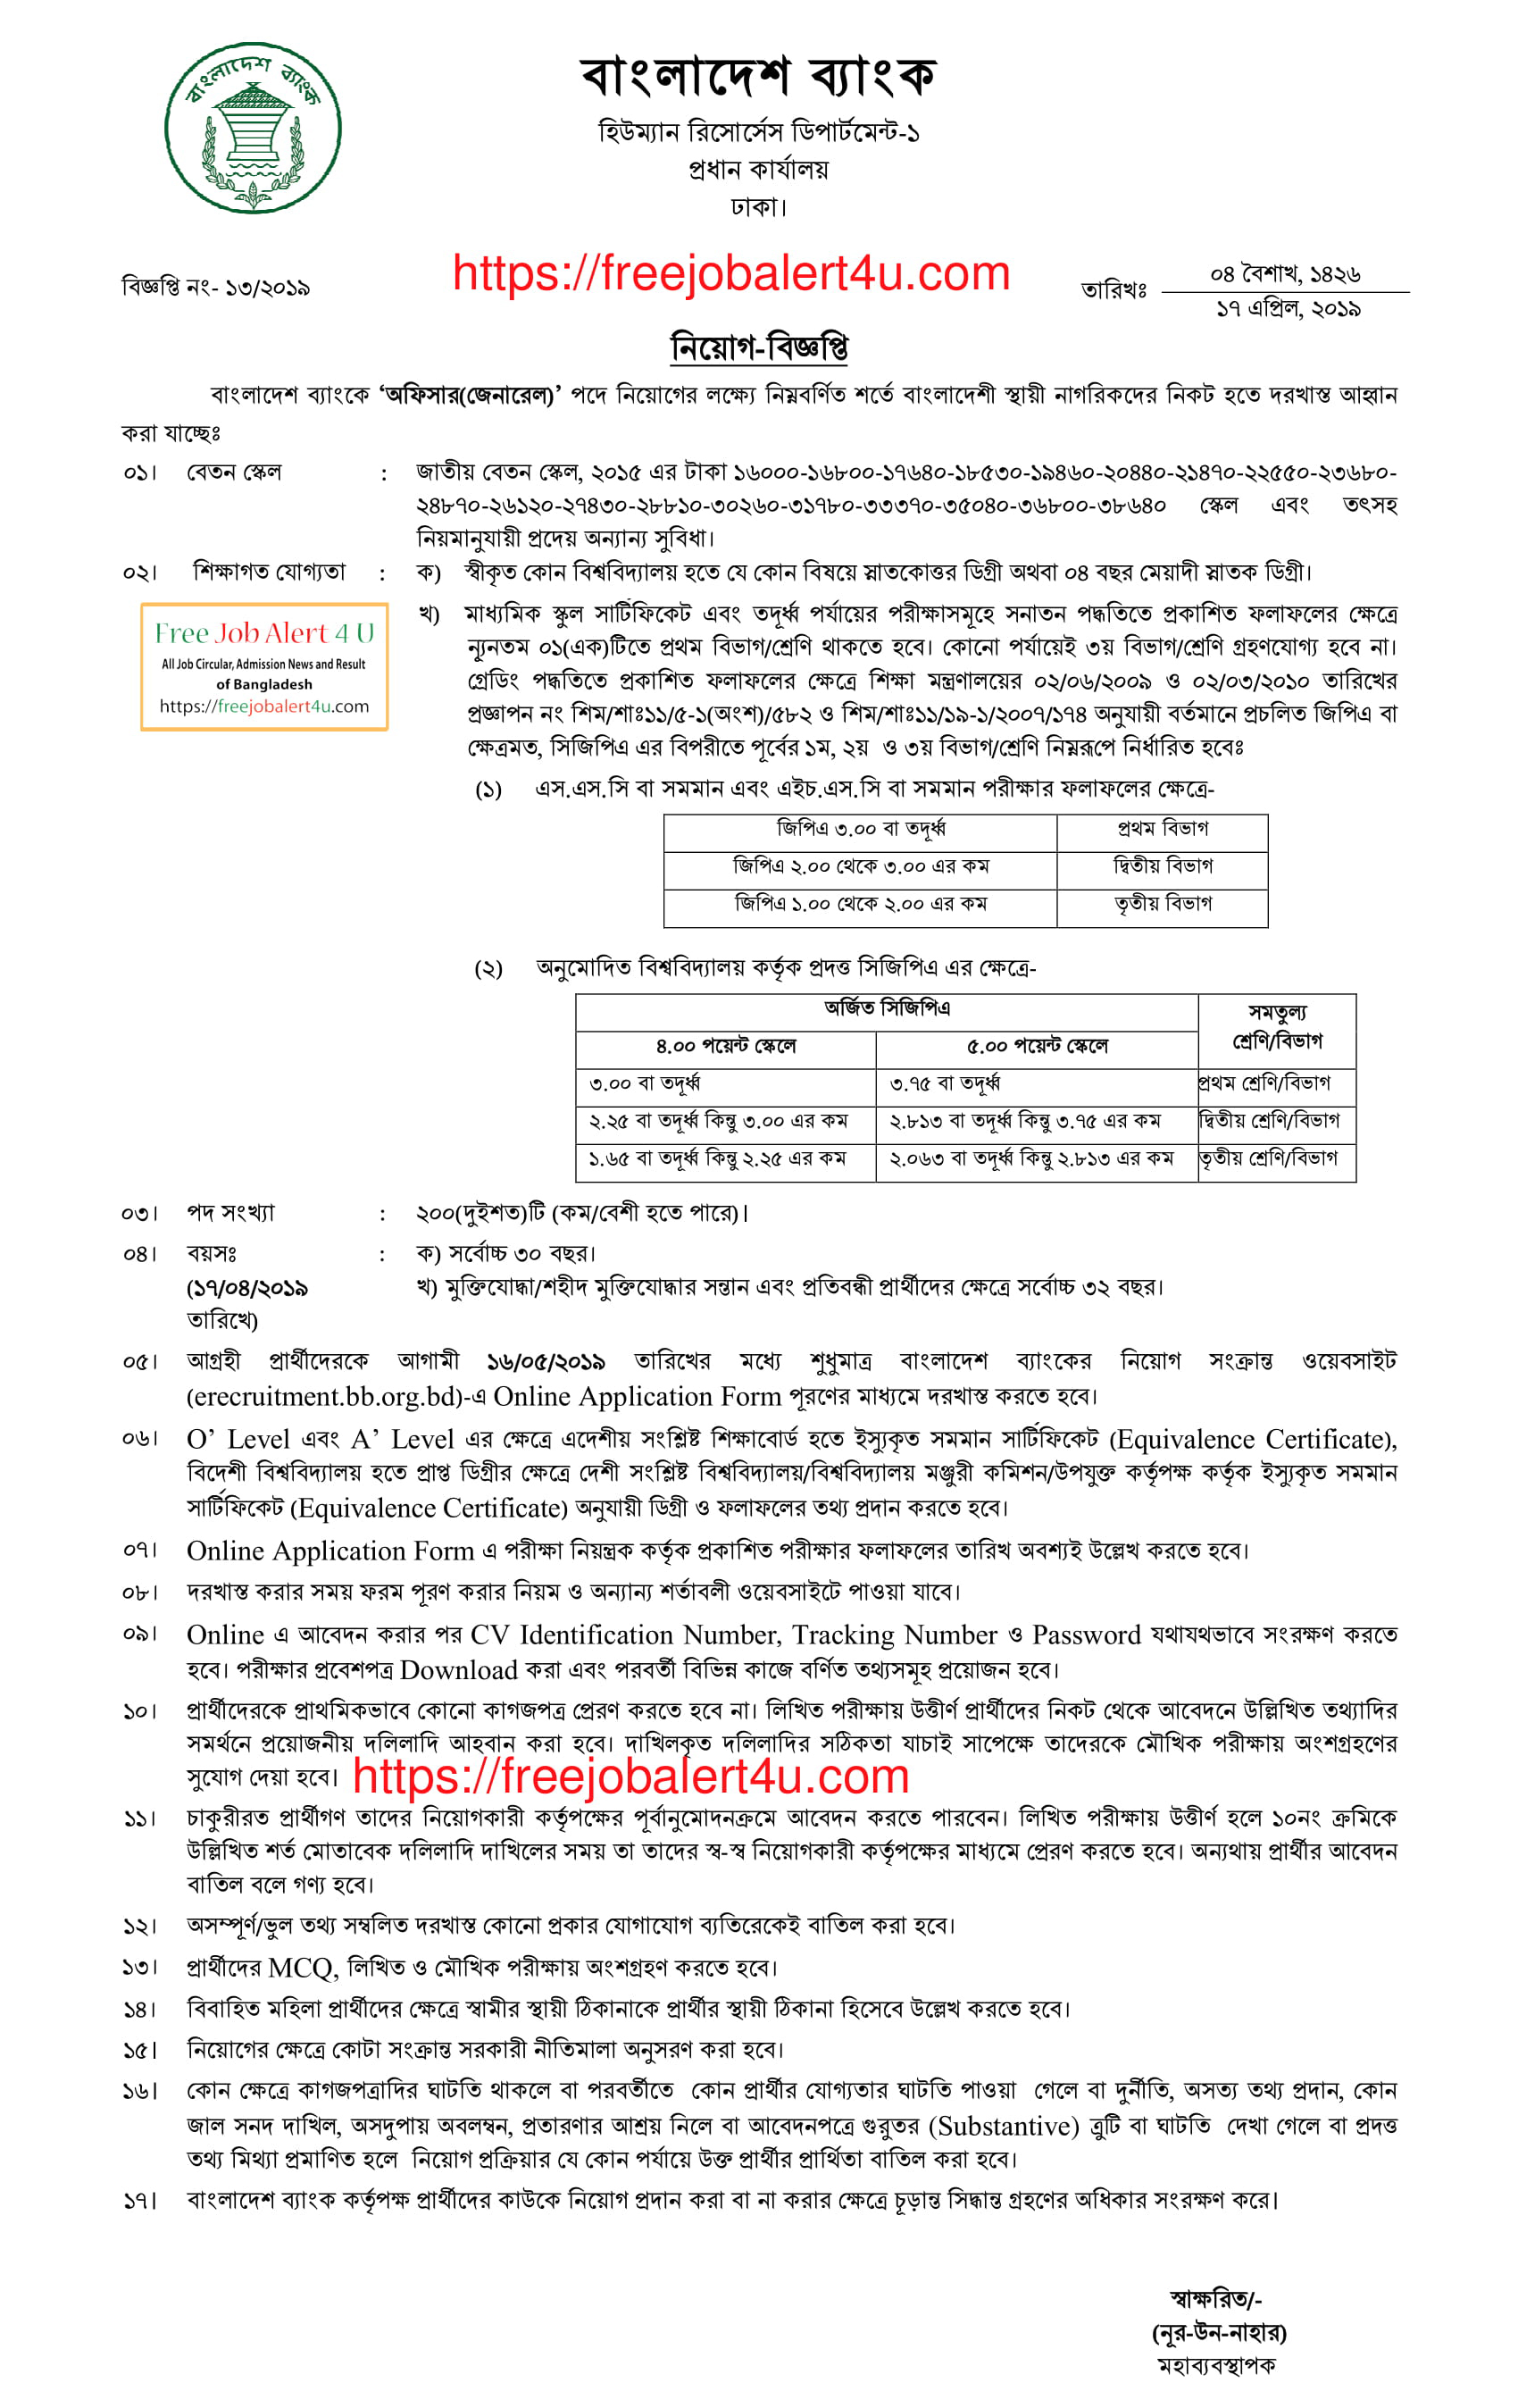 Bangladesh Bank Officer General Job Circular 2019